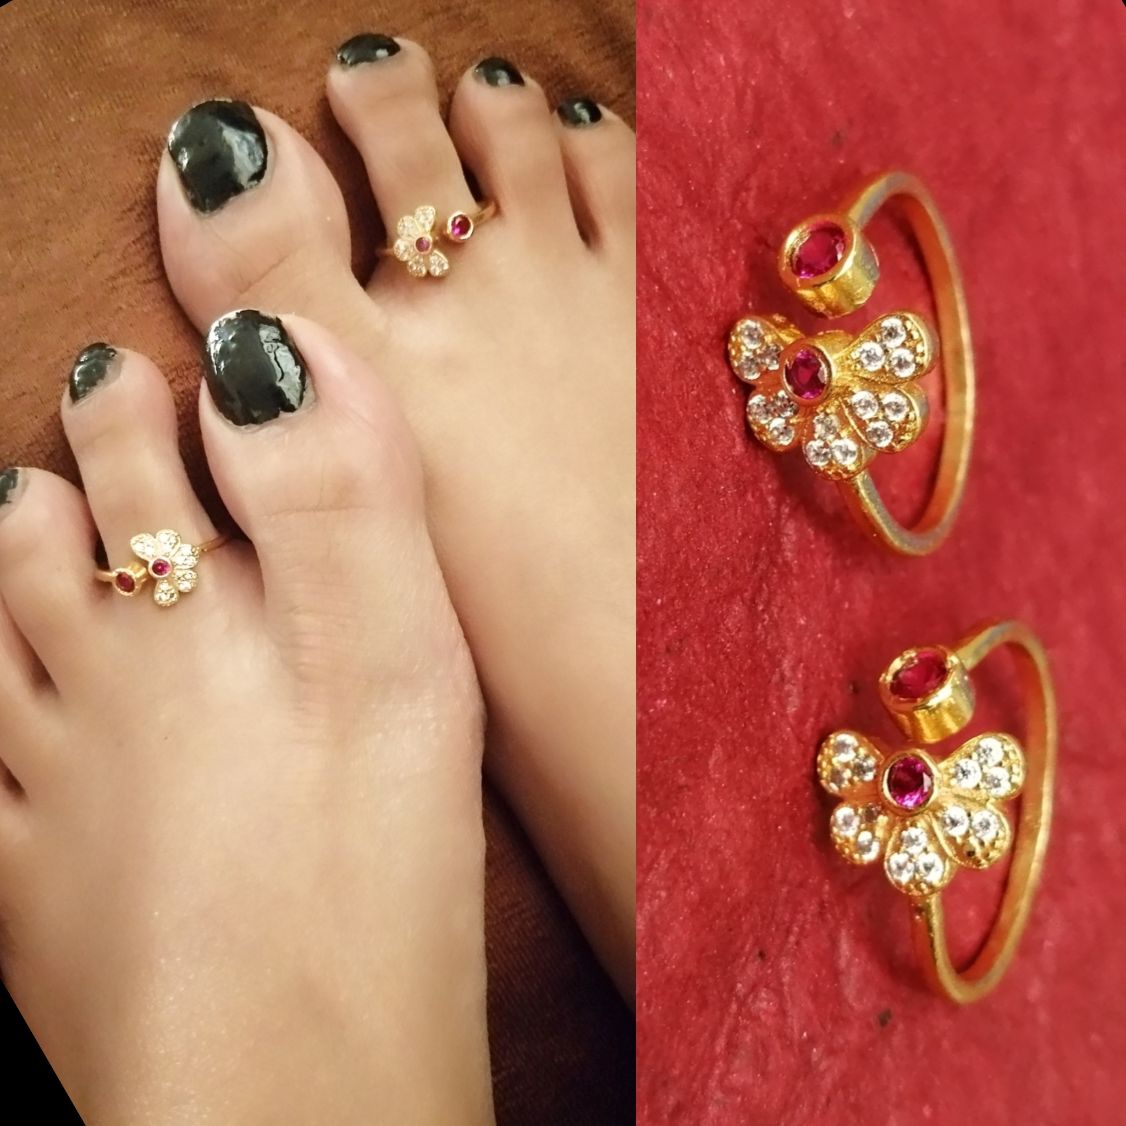 Hakuna matata big toe ring – SilverwithSabi-offical